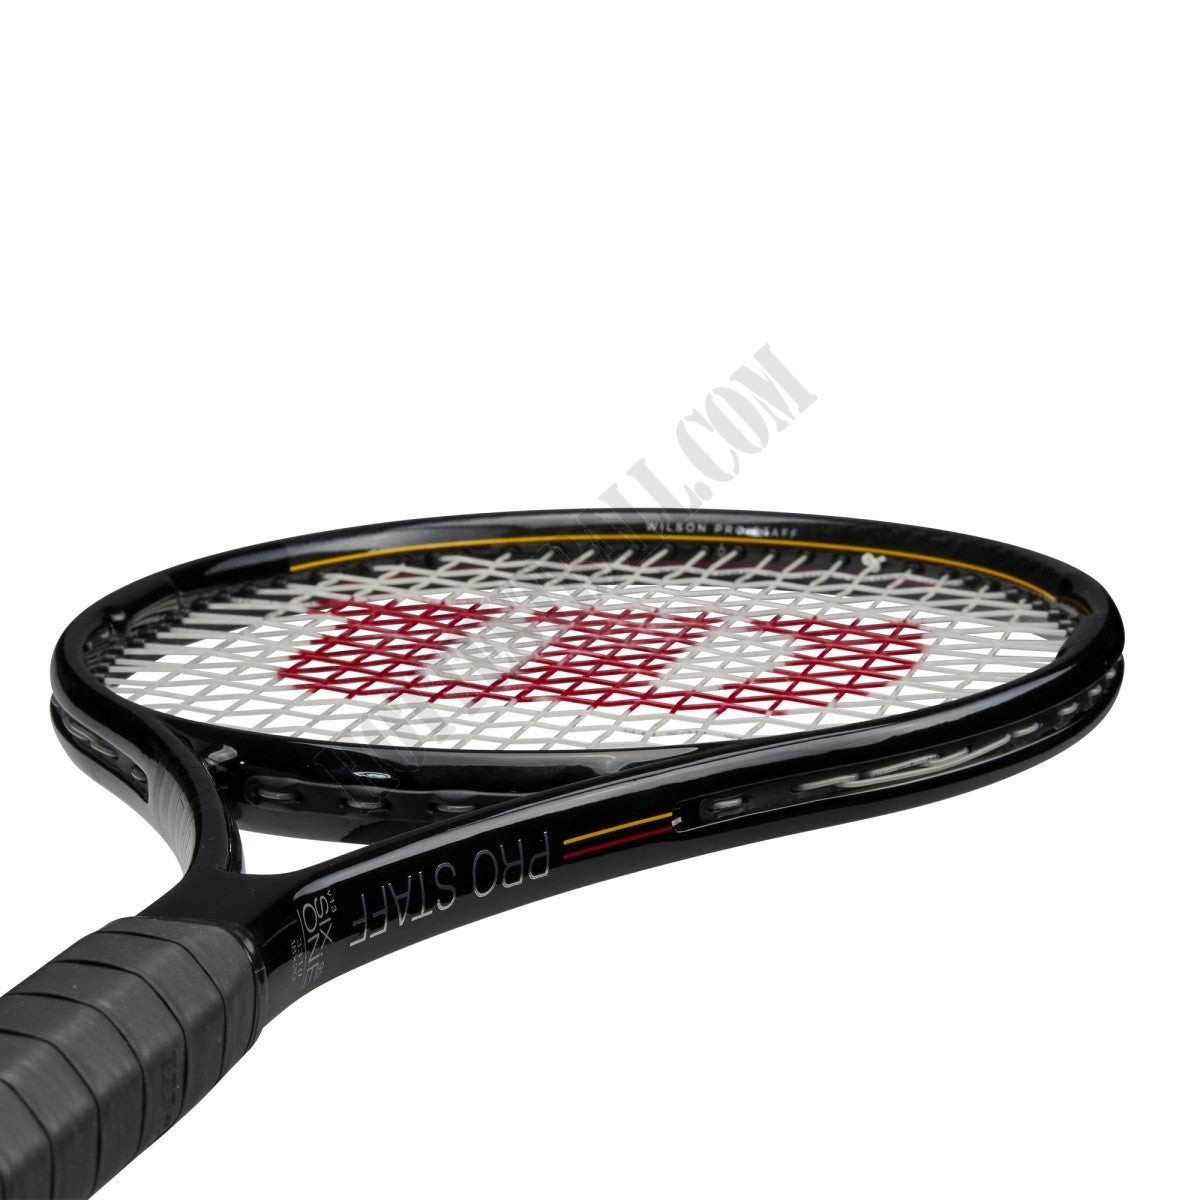 Pro Staff Six.One 95 (18x20) Tennis Racket - Wilson Discount Store - -4